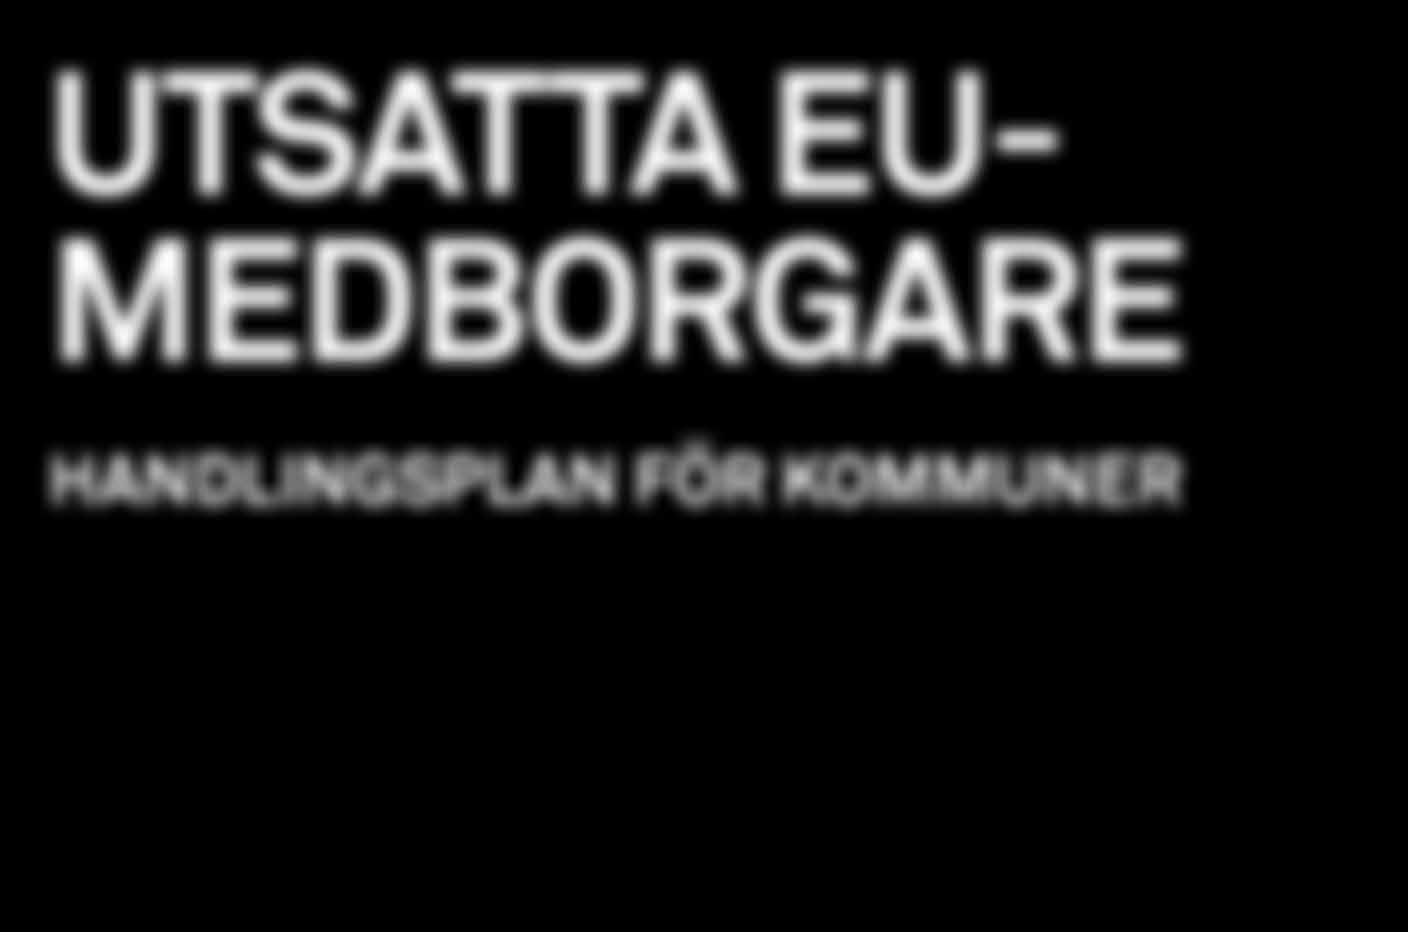 Stockholm, januari 2017 UTSATTA EU-